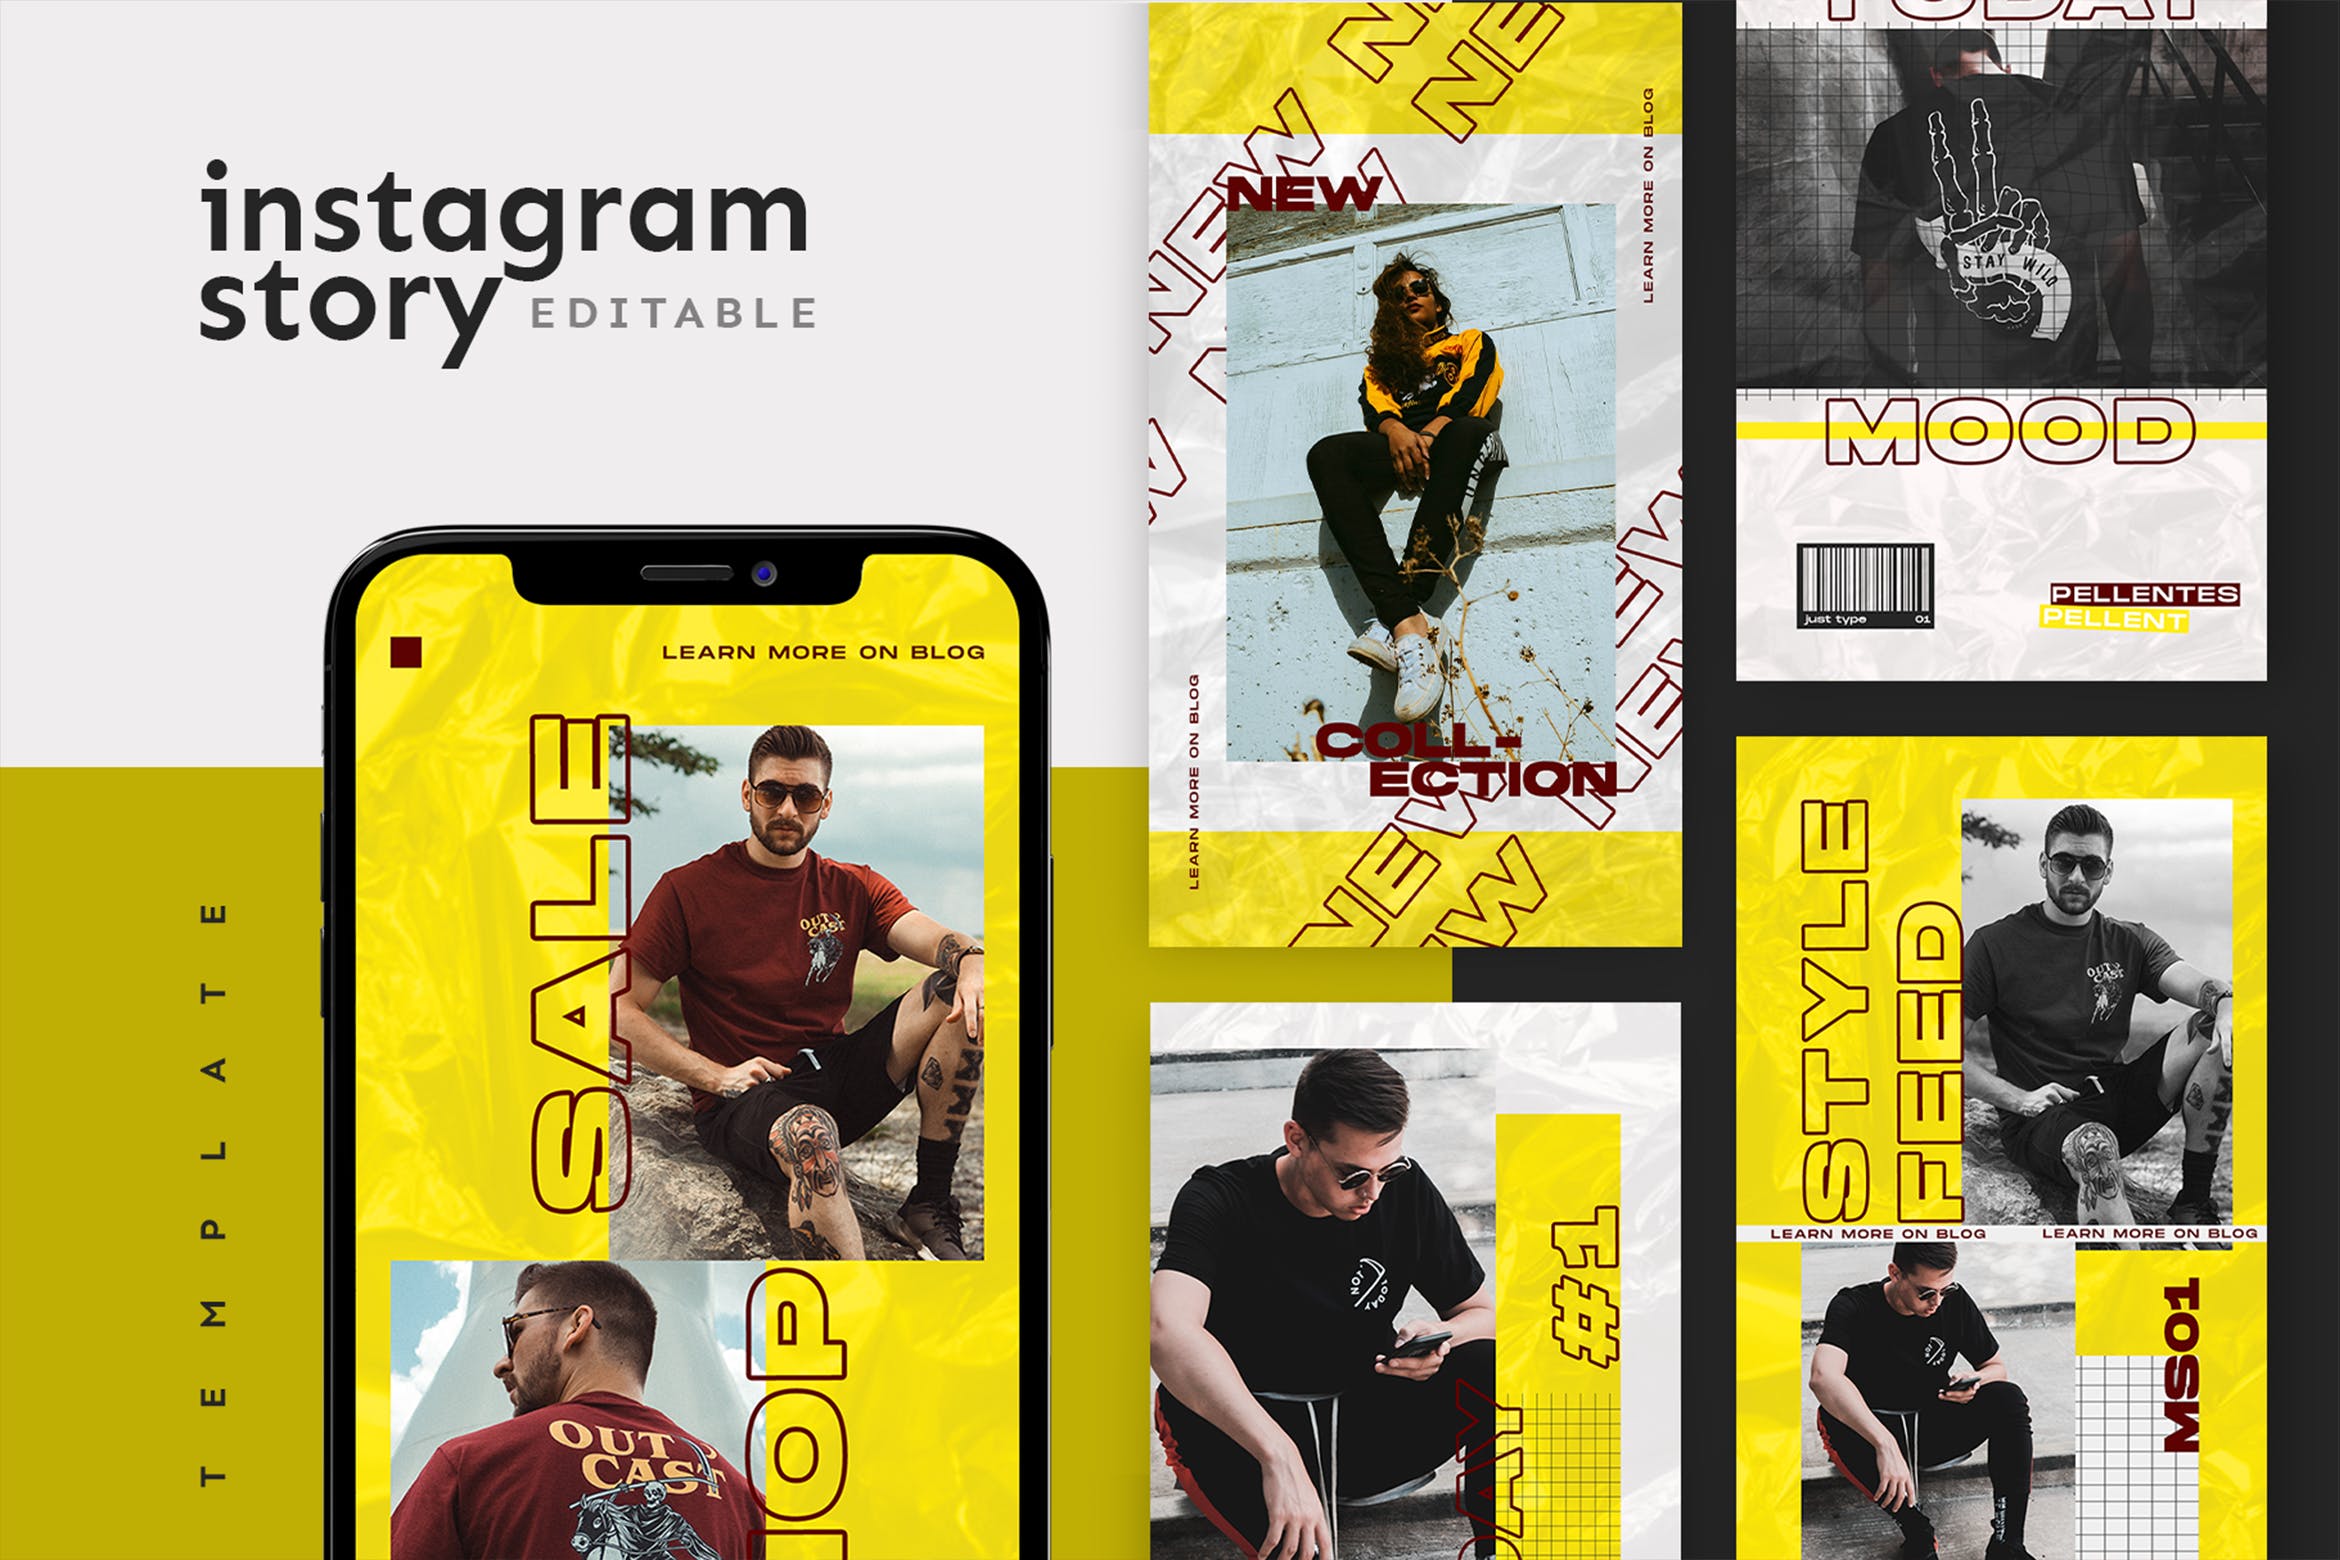 Instagram社交平台品牌故事广告设计模板素材中国精选 Instagram Story Template插图